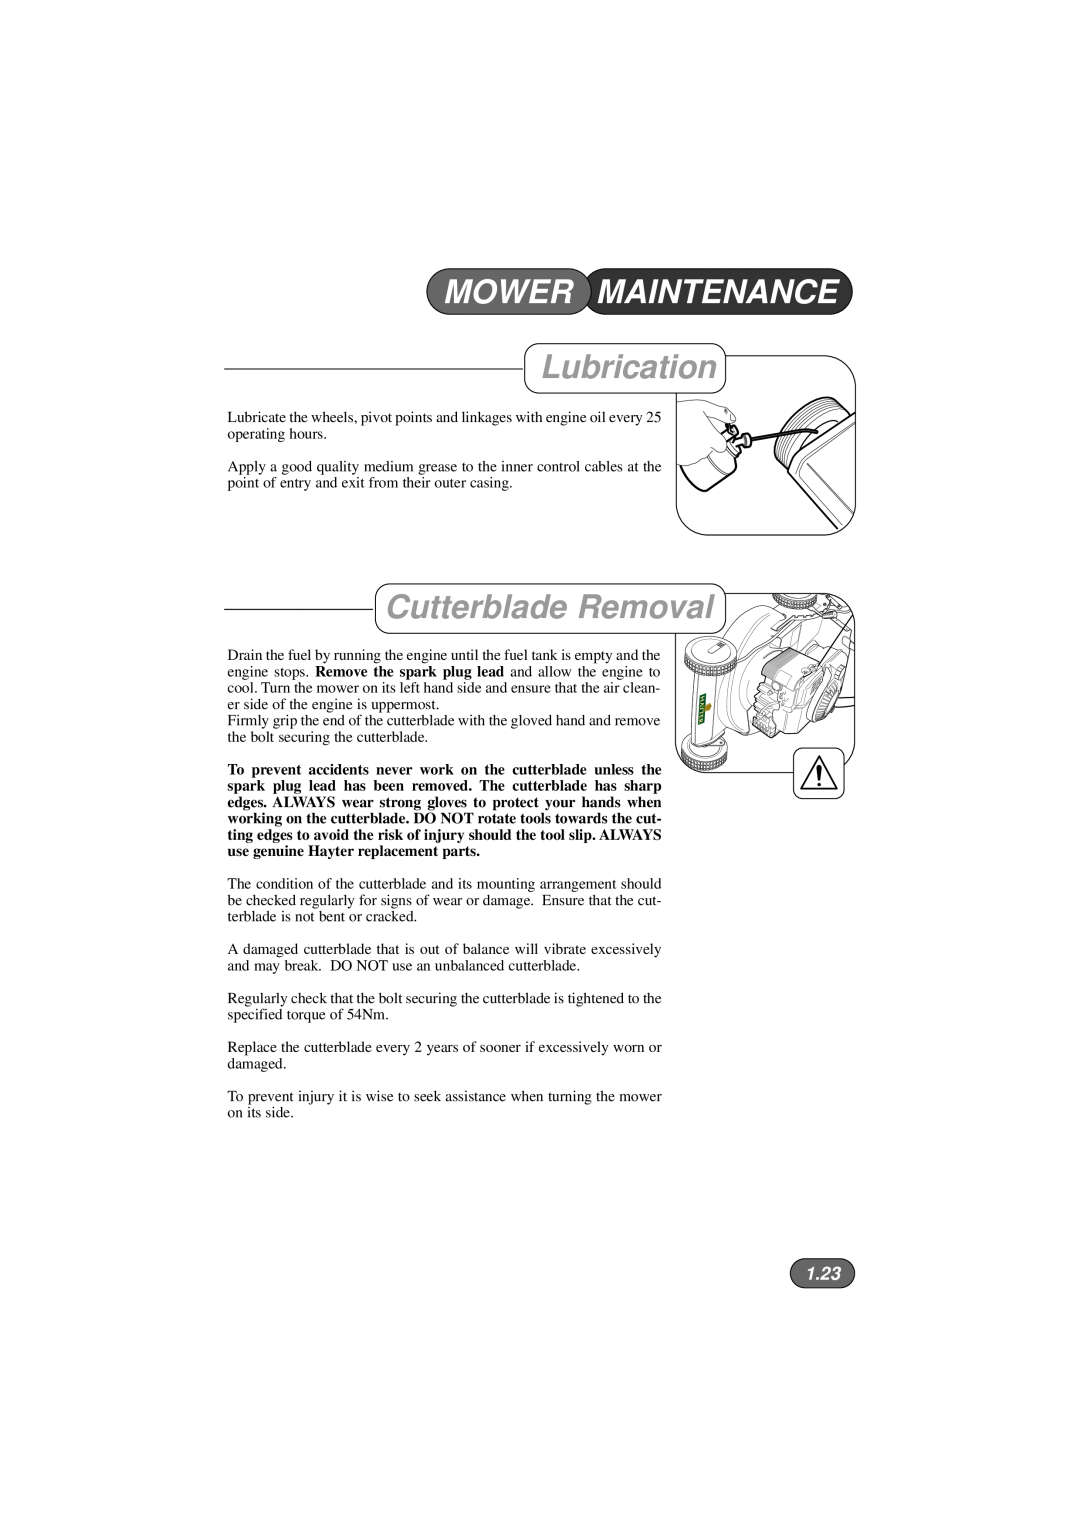 Hayter Mowers 424V, 422V, 423V manual Lubrication, Cutterblade Removal, 1.23, Mower Maintenance 